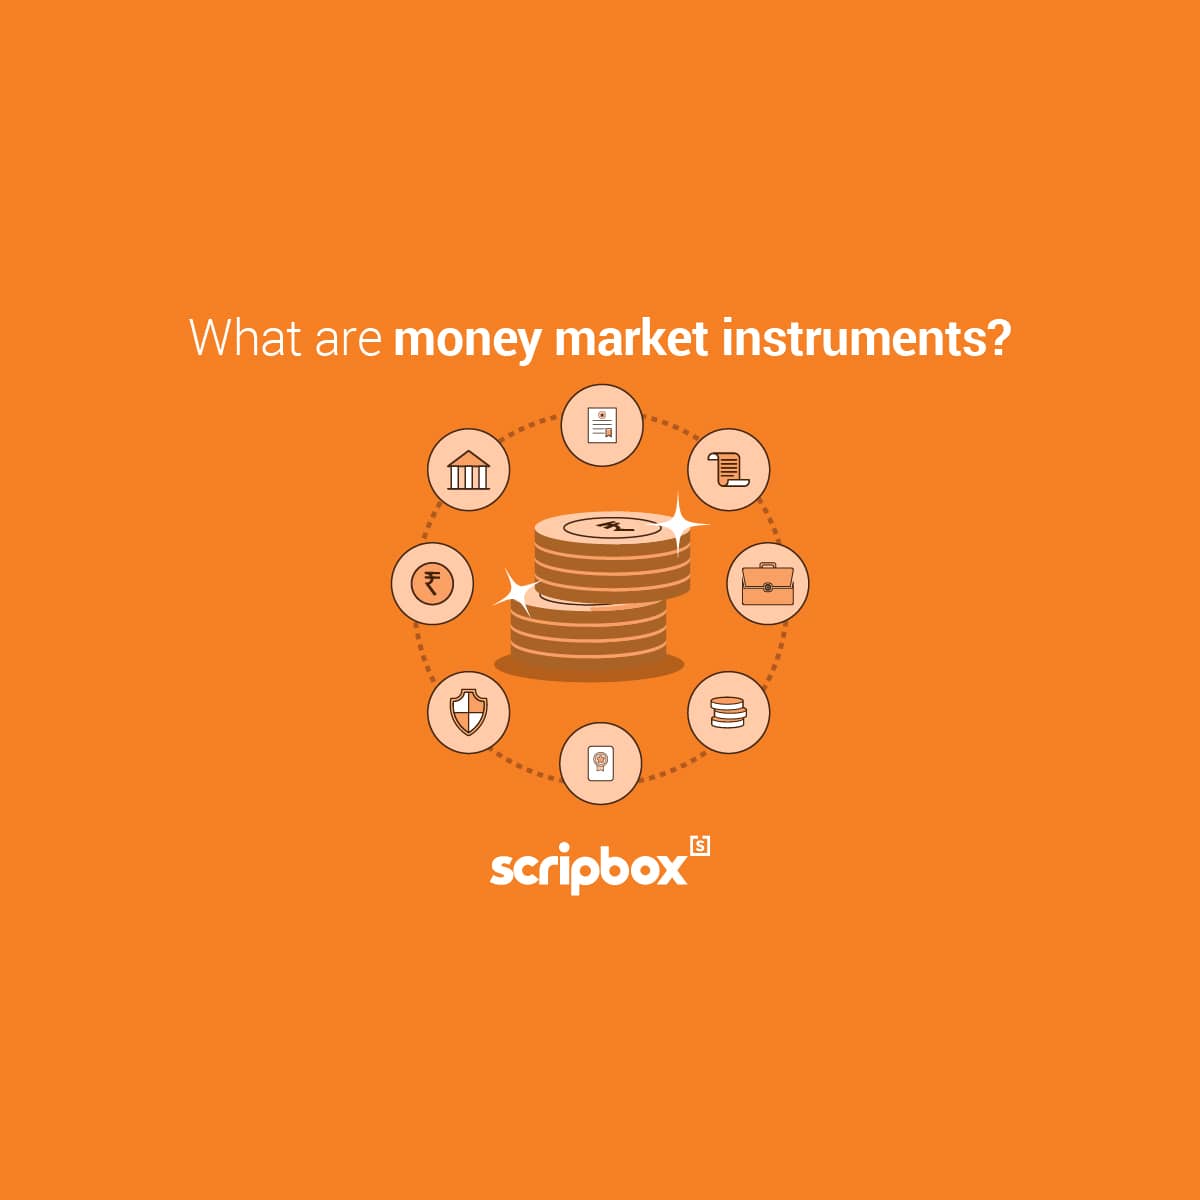 the moneymoney market instruments include